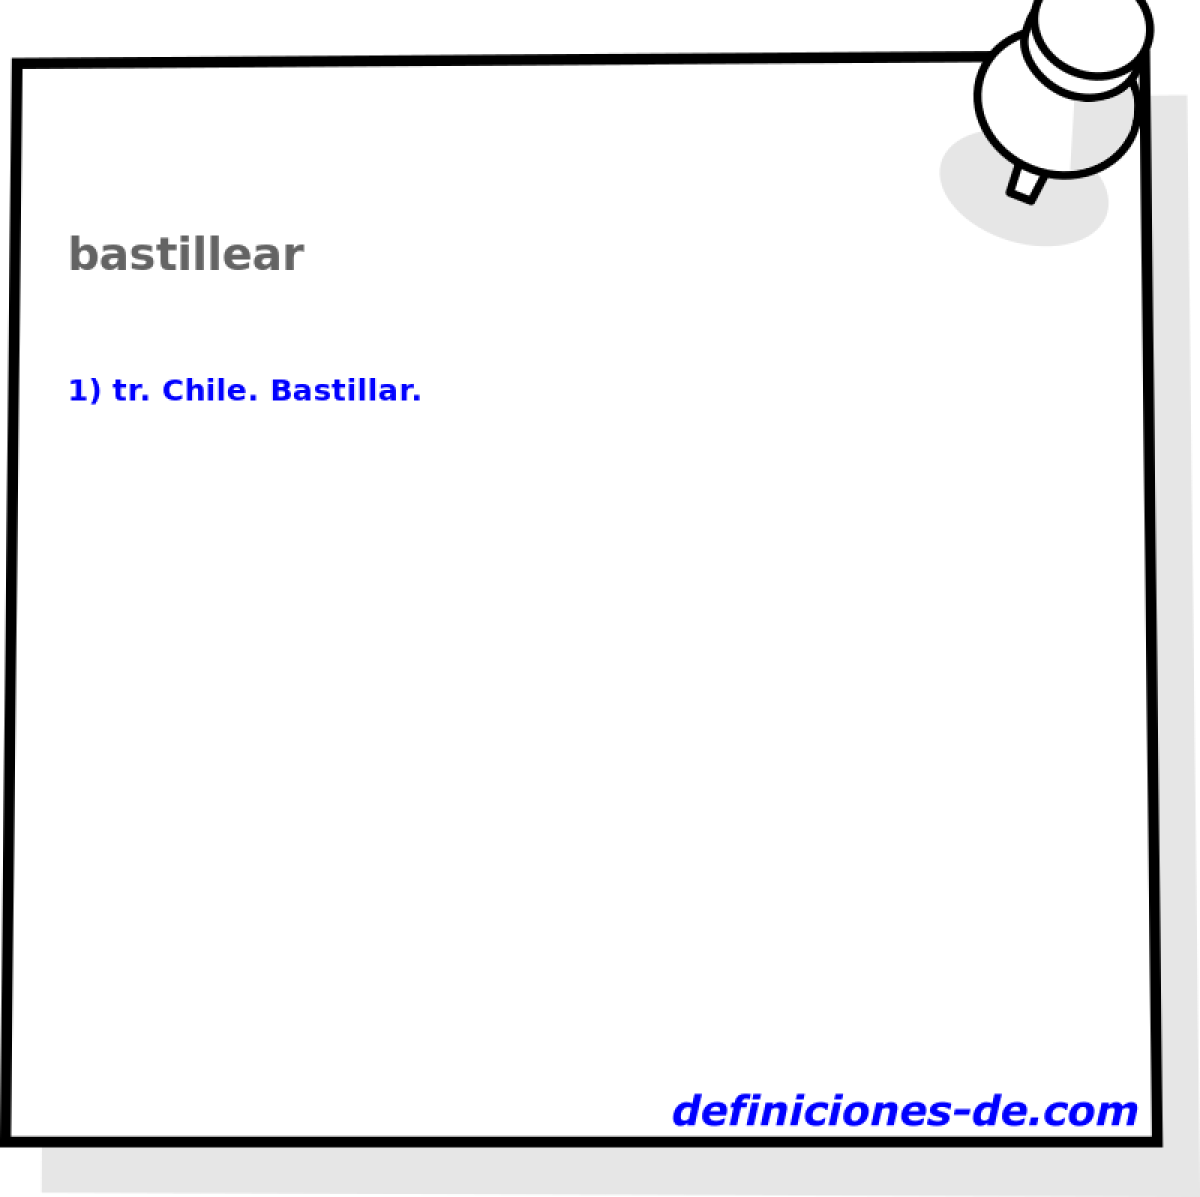 bastillear 